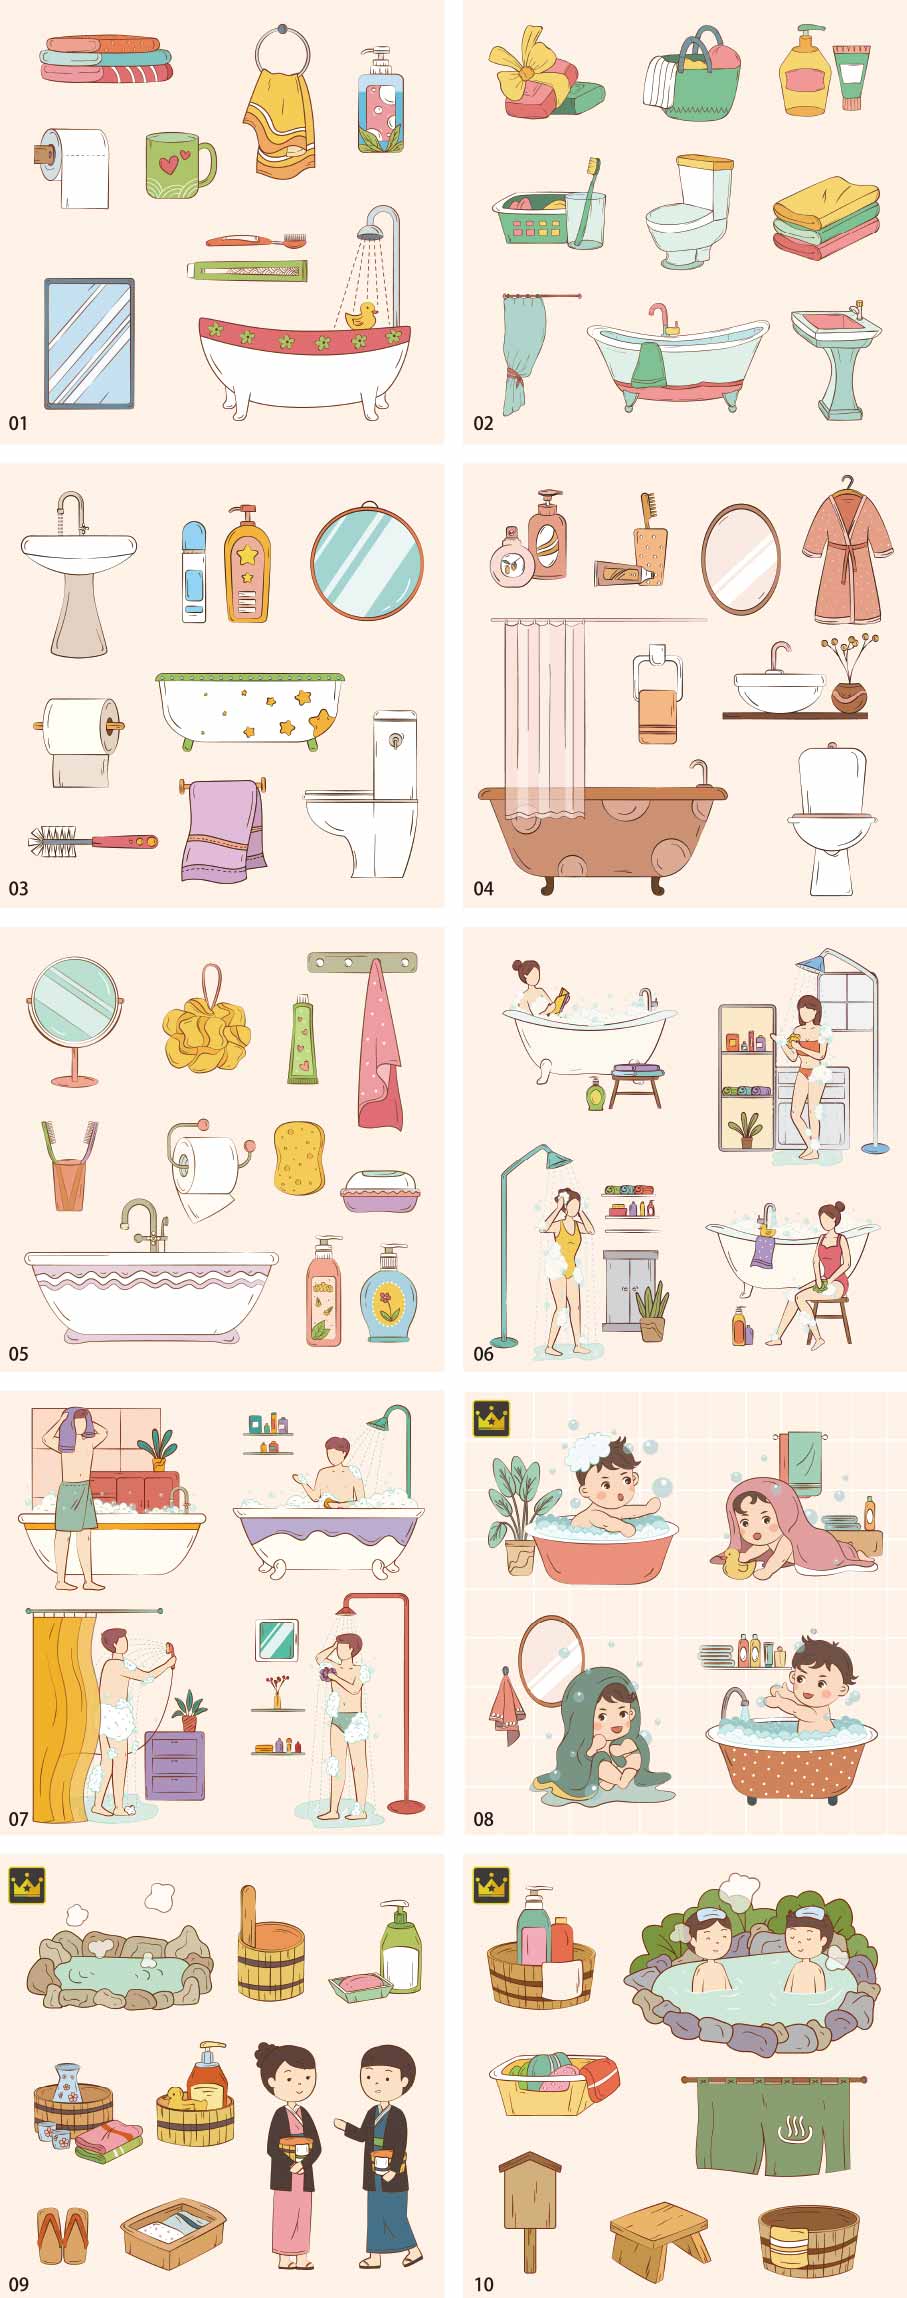 bath illustration collection